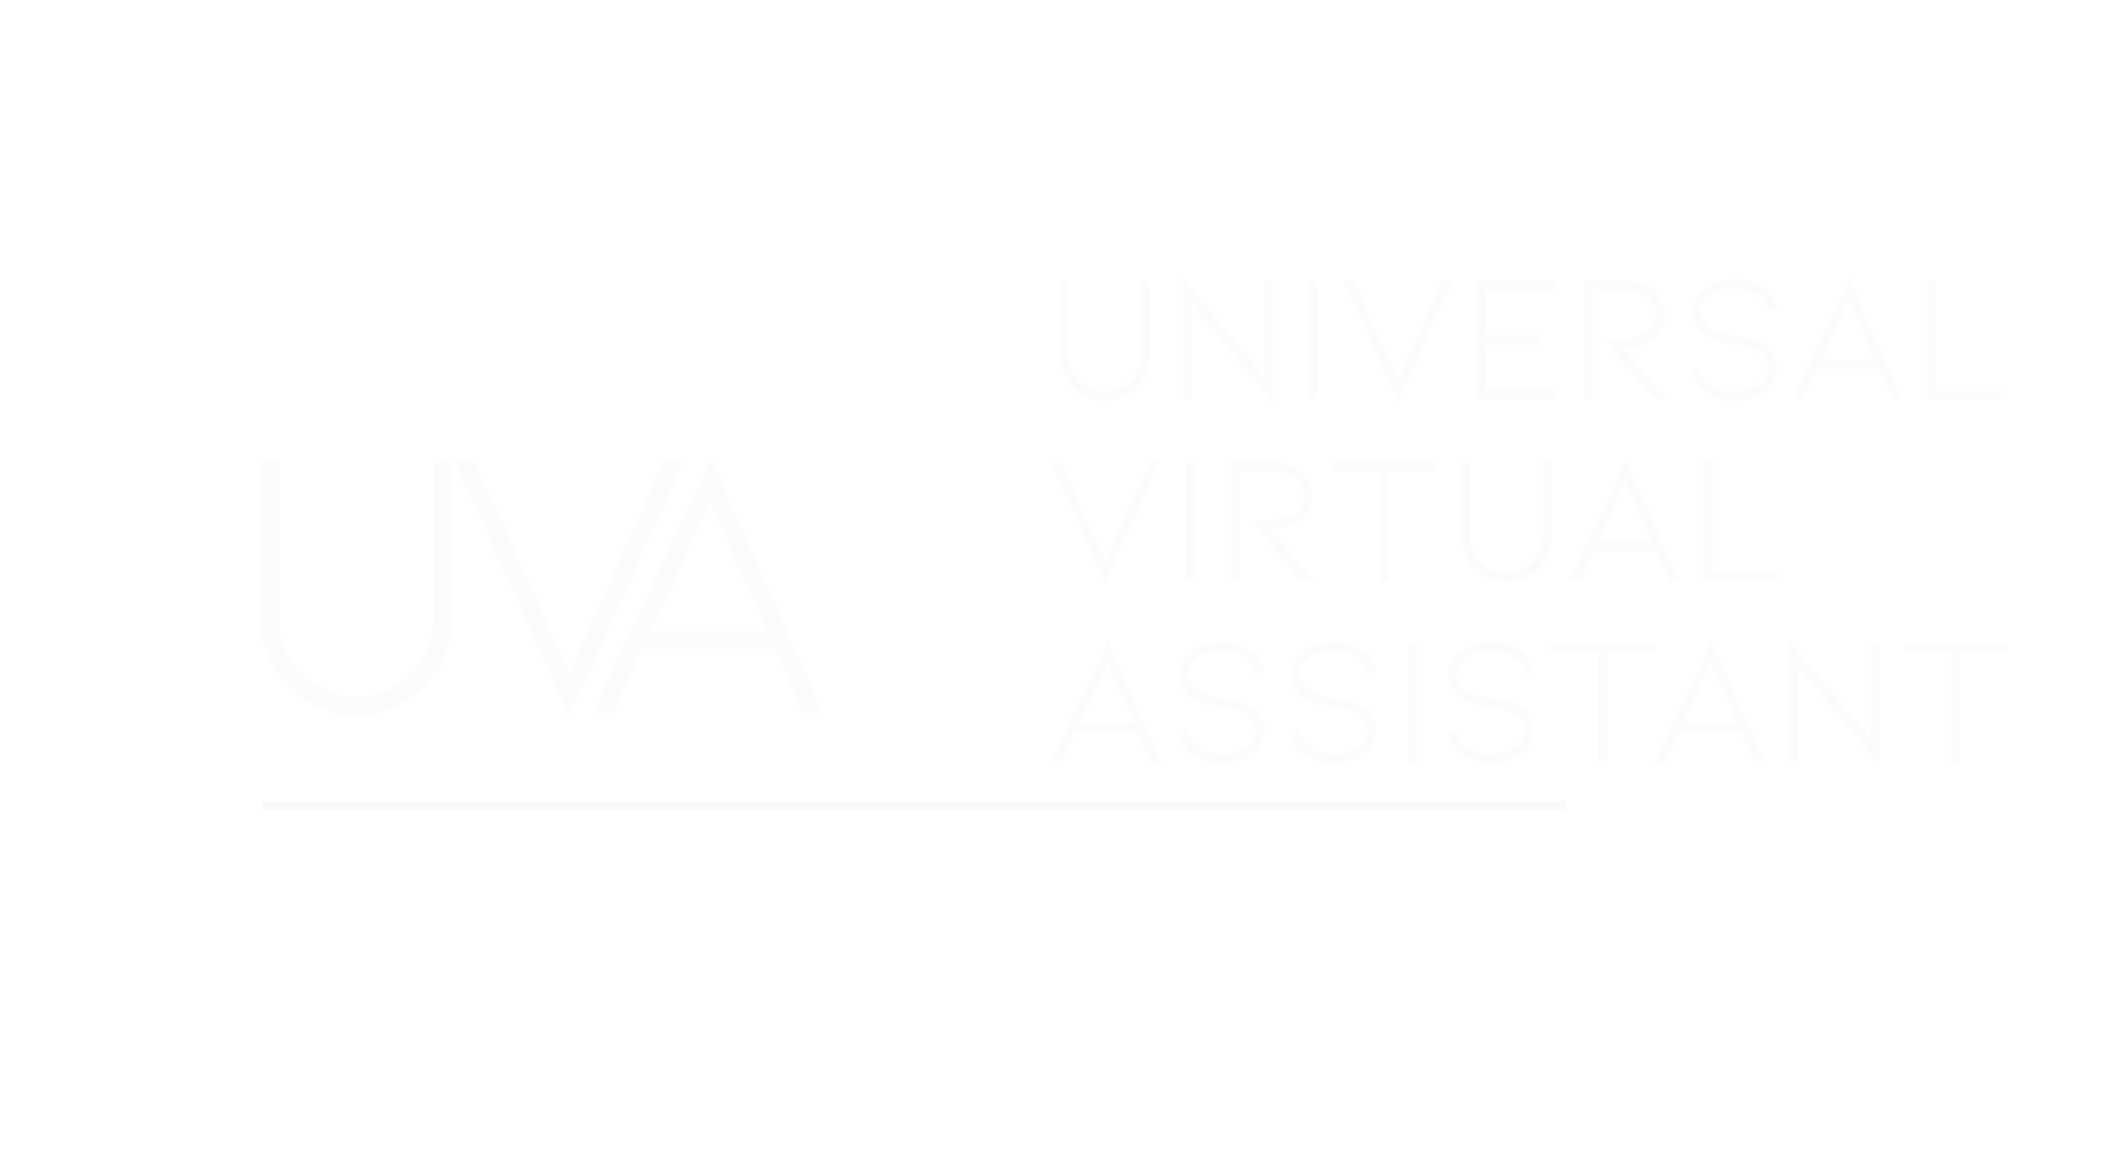 Universal Virtual Assistant